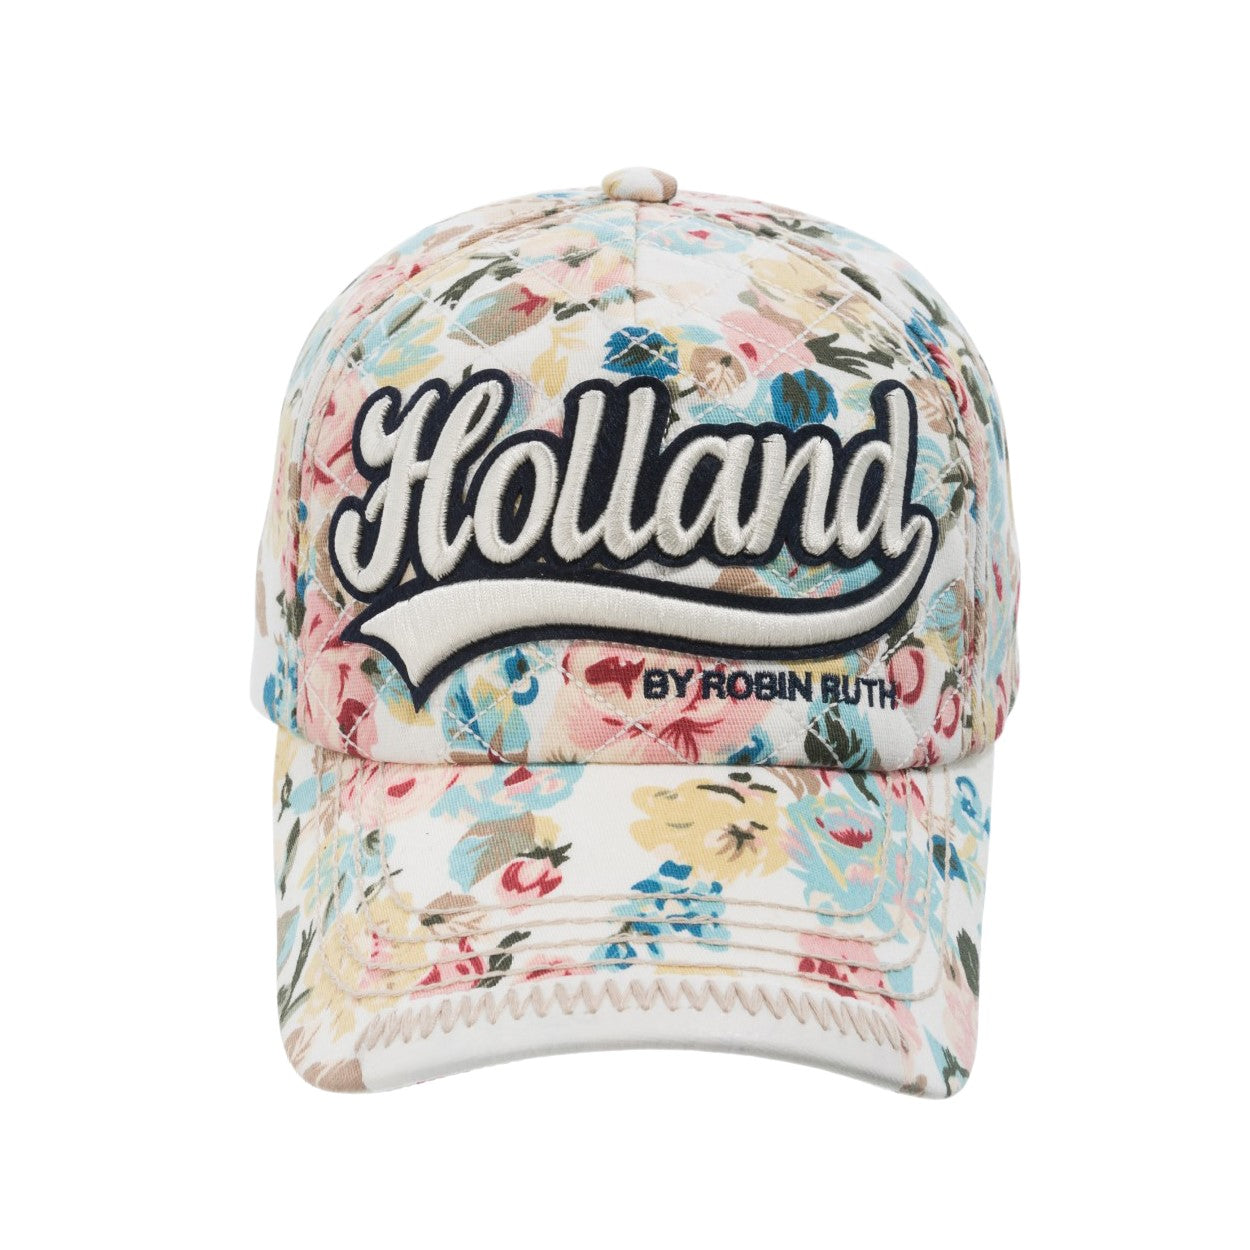 J.J. - Flowers cap - Holland